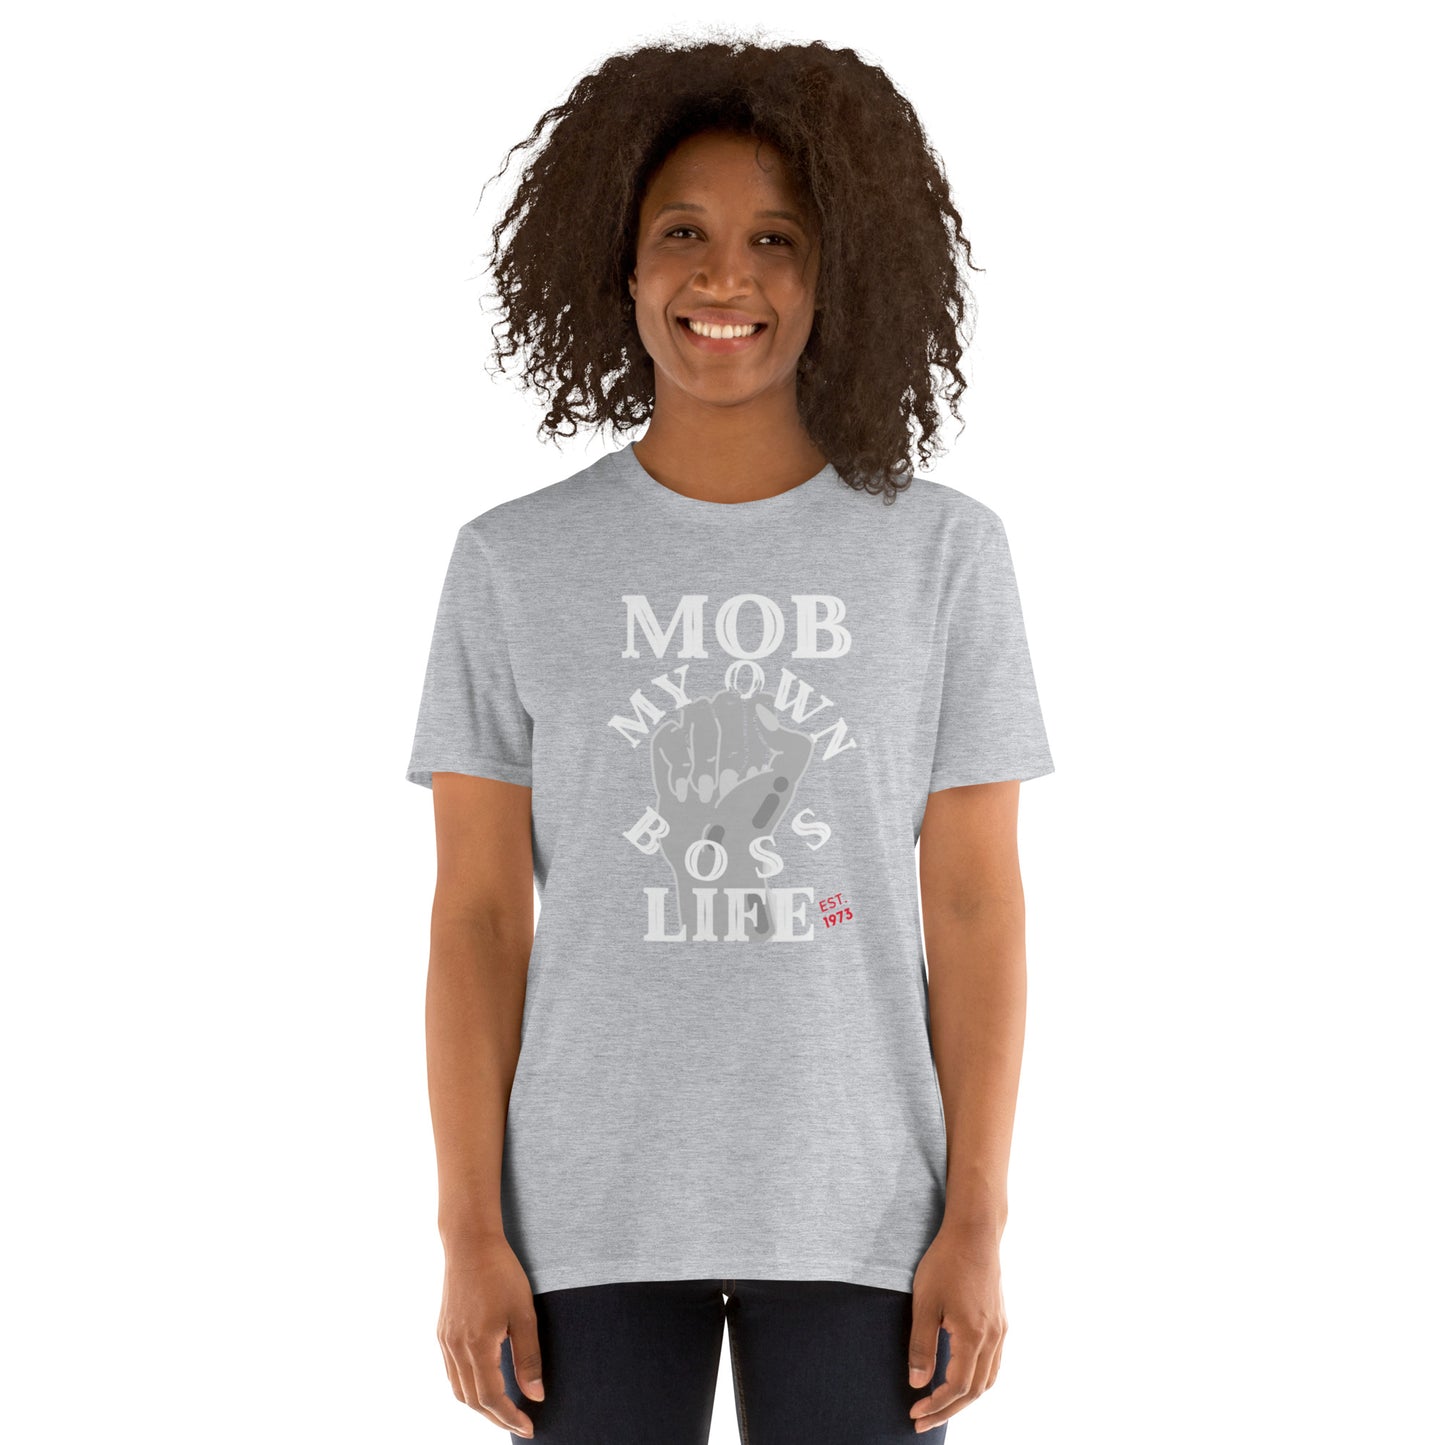 M.O.B. Life Fist Short-Sleeve Unisex T-Shirt